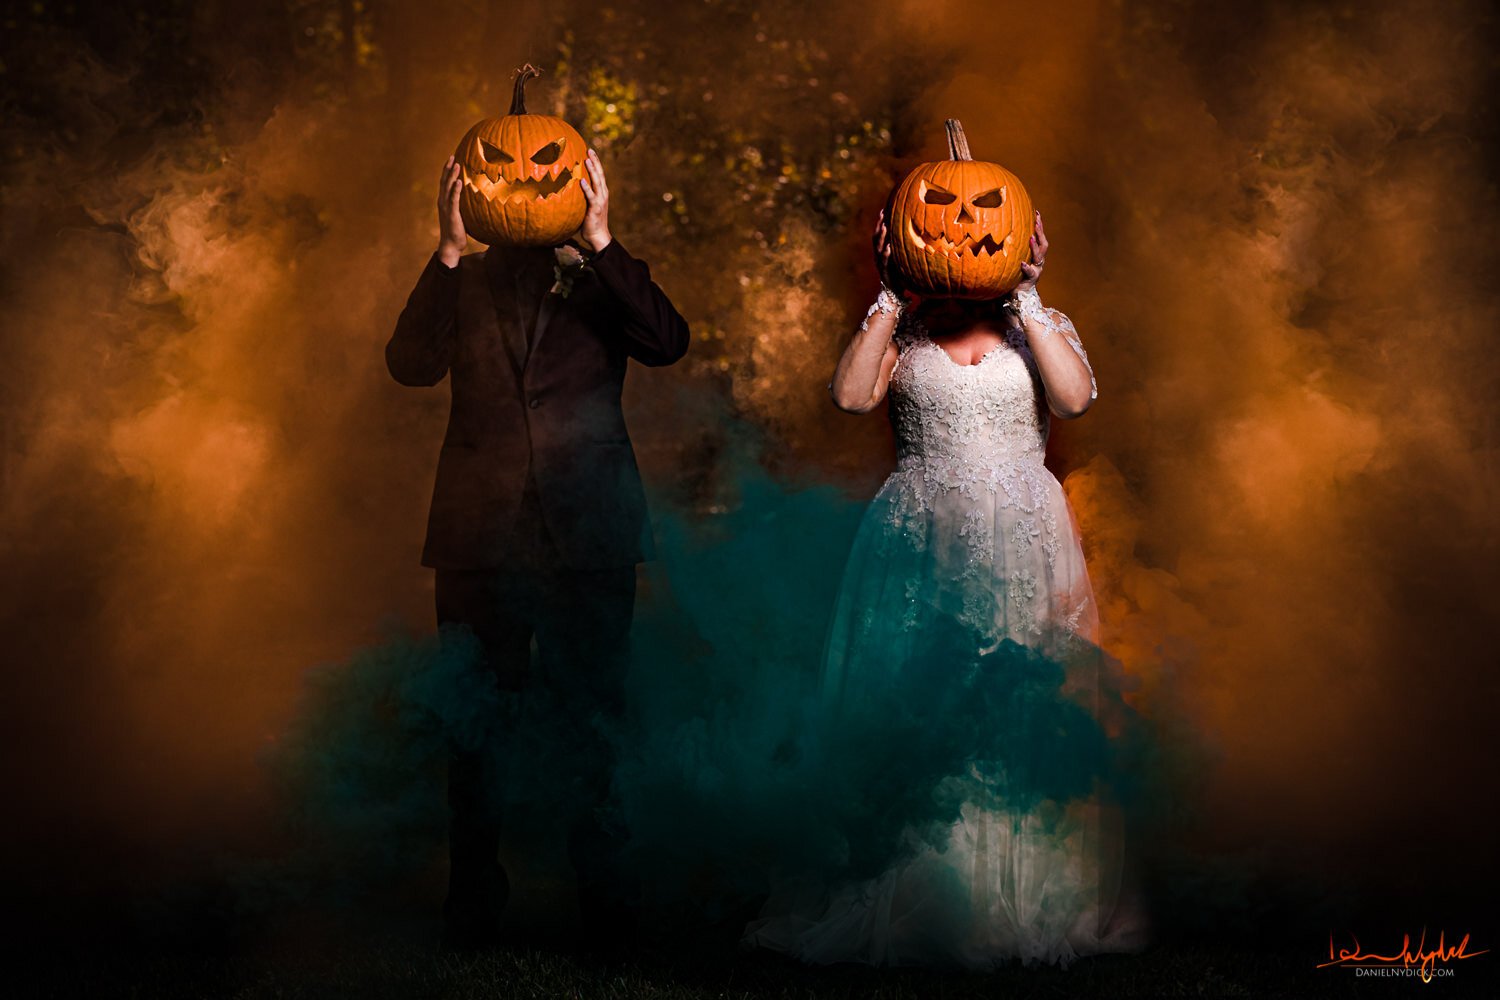 epic smoke bomb pumpkin portrait at nj halloween wedding fearles